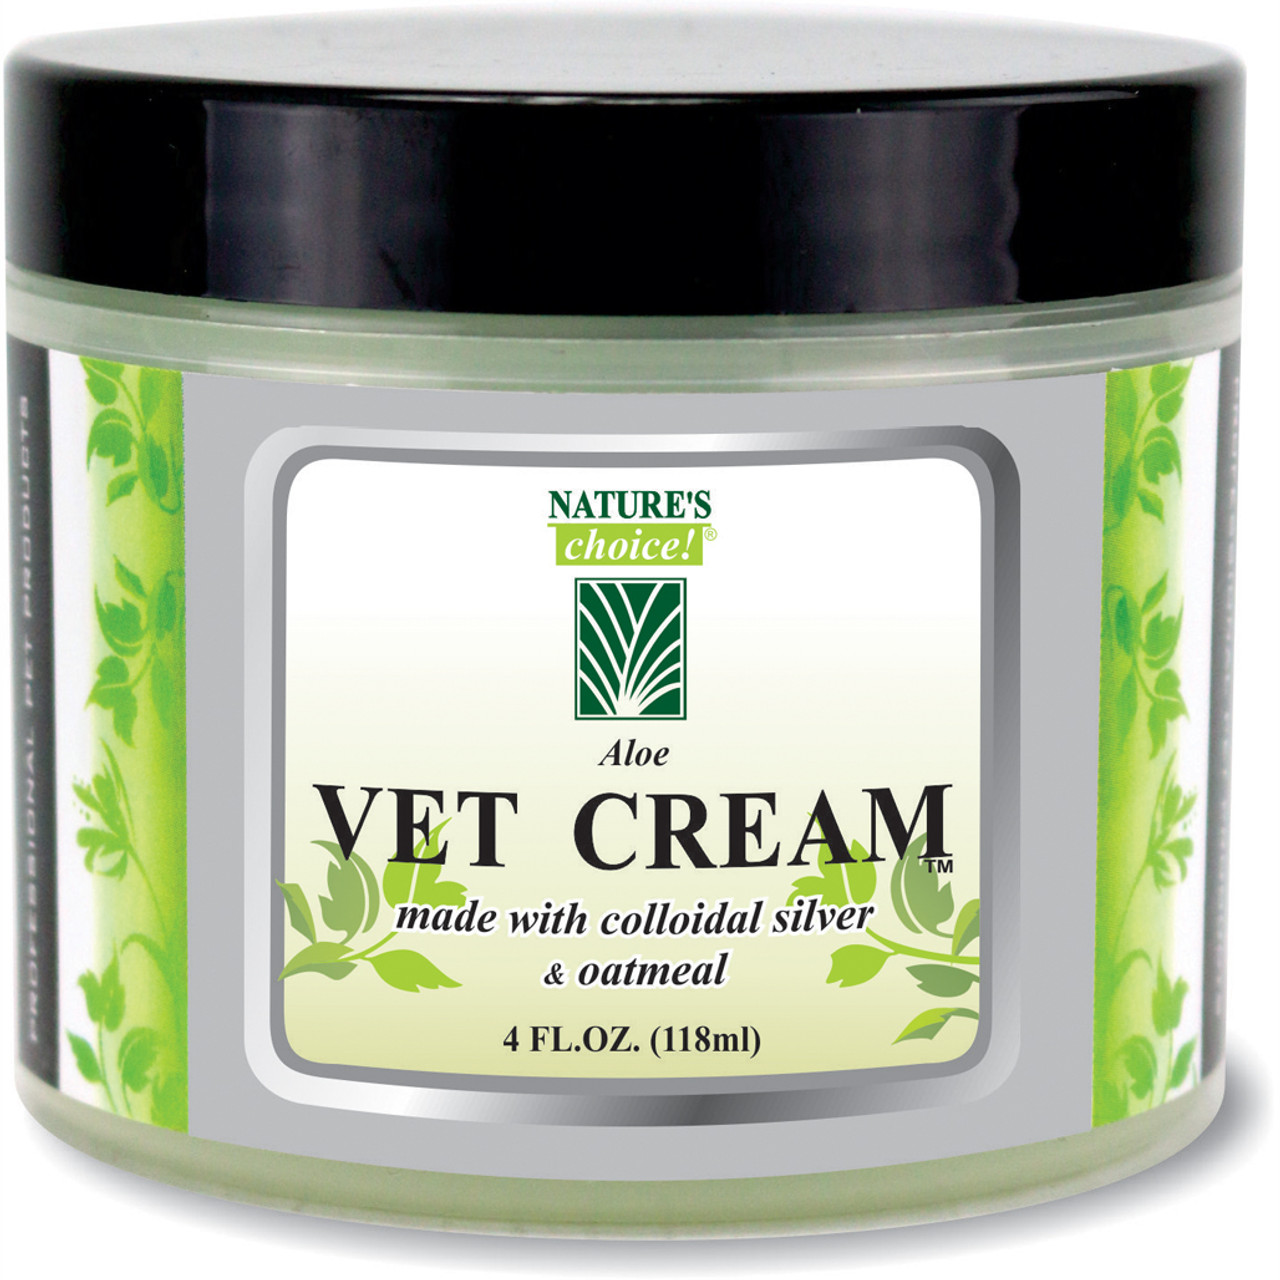 Nature's Choice!® Aloe Vet Cream in 4 oz.